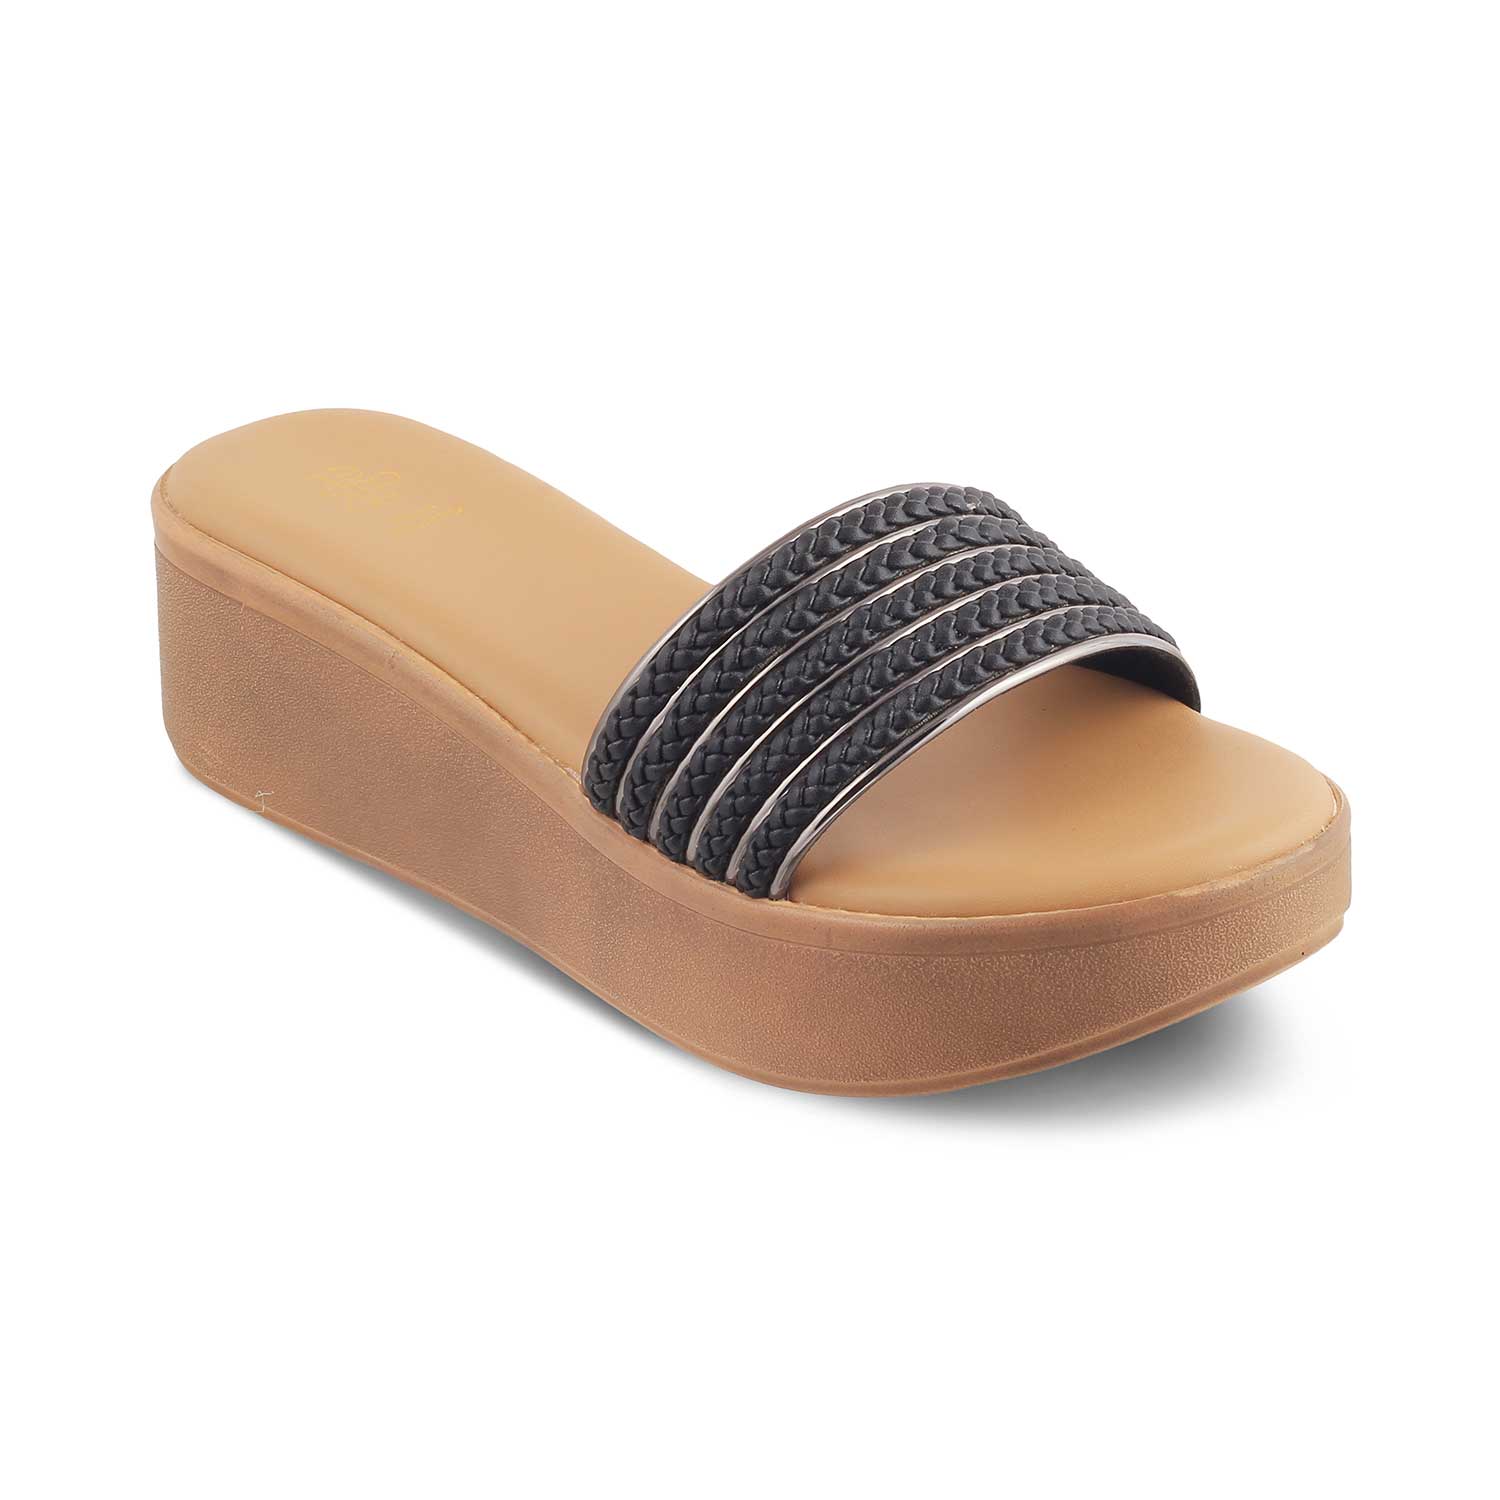 The Andiamo Black Women's Platform Wedge Sandals Tresmode - Tresmode